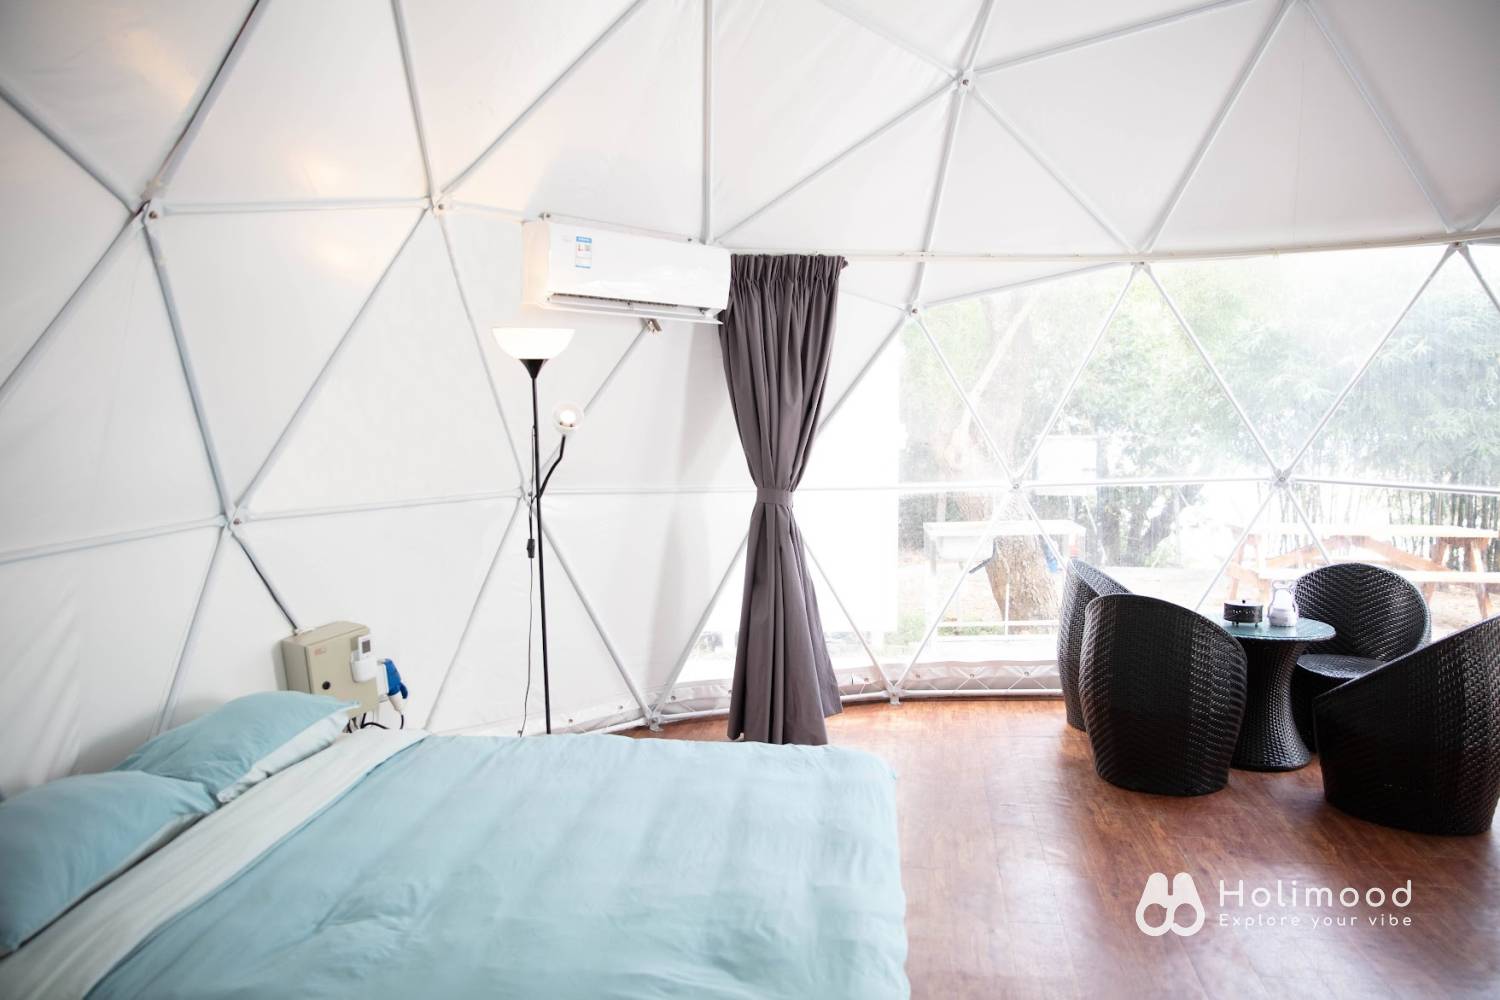 Sai Yuen Camping Adventure Park - Cheung Chau Campsite Geodesic Dome 3